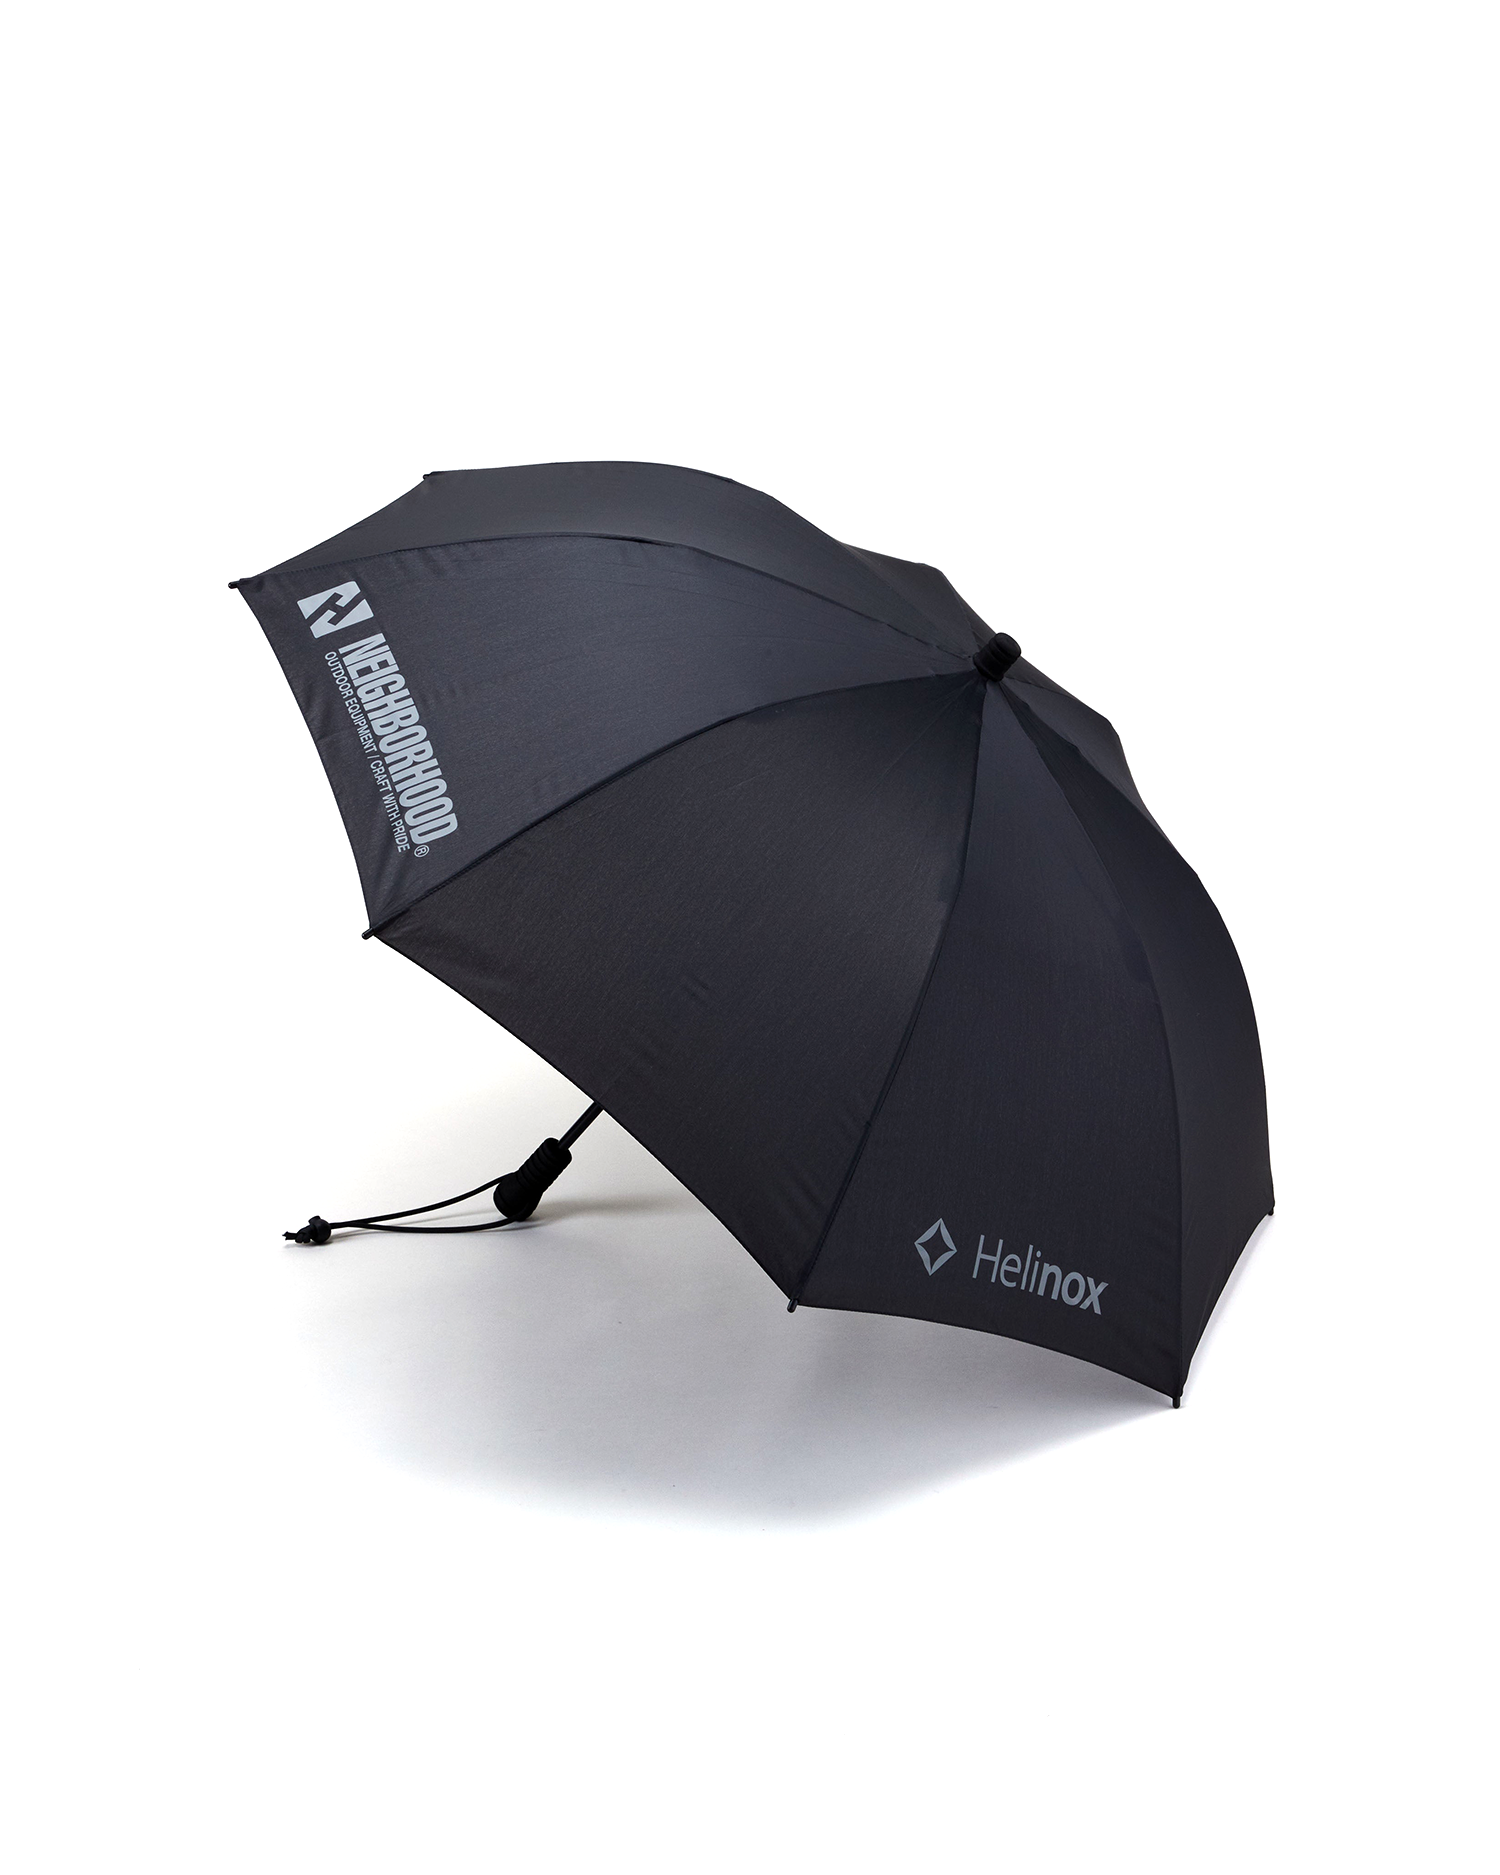 NH x Helinox Umbrella - Black